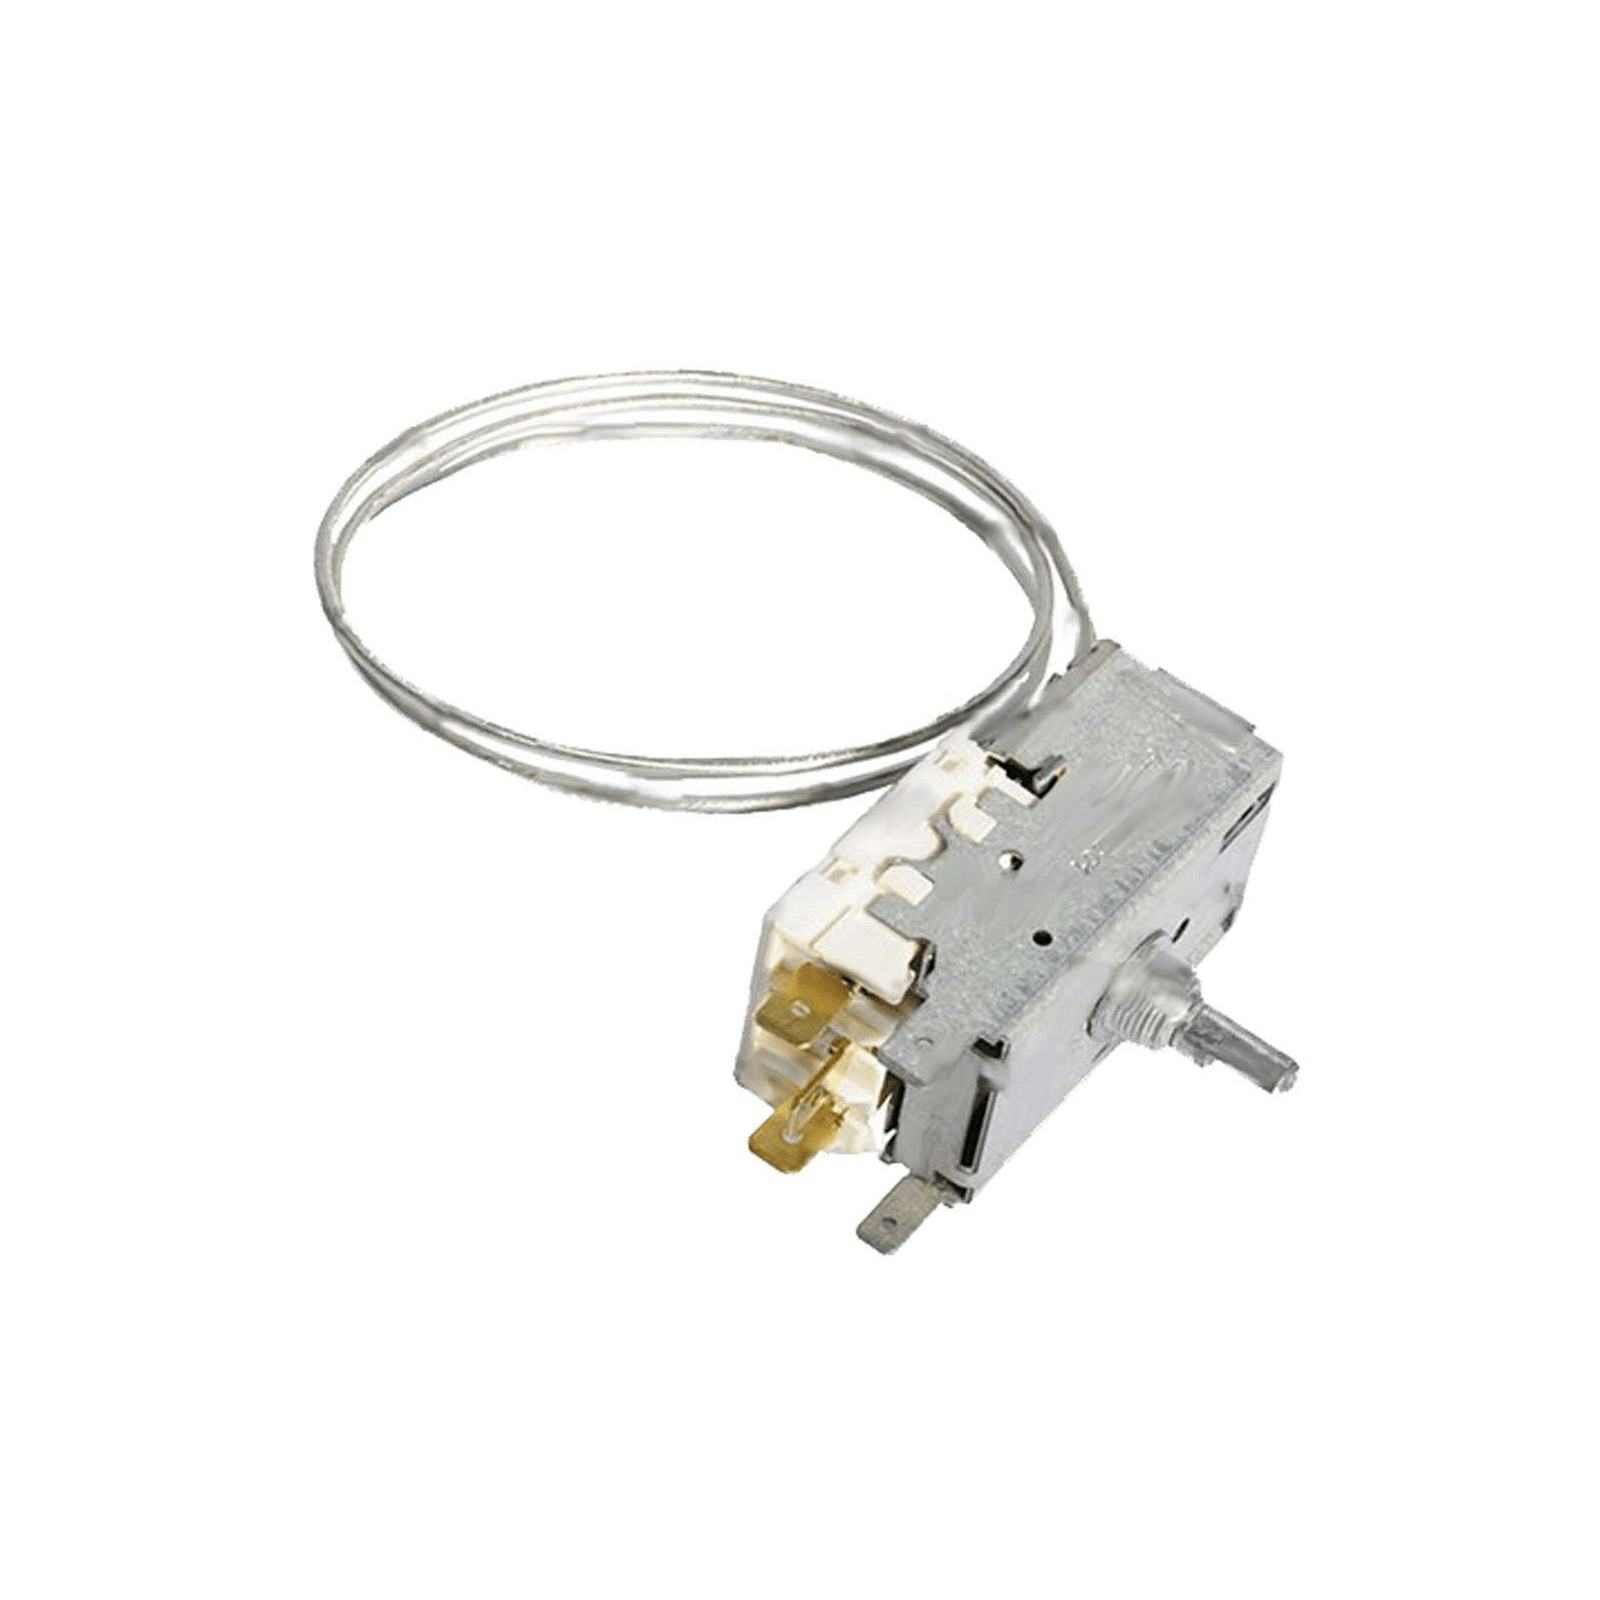 Thermostat Ranco K57-L5871 (alternative for K57-P2057) for refrigerator AEG Electrolux 205470470